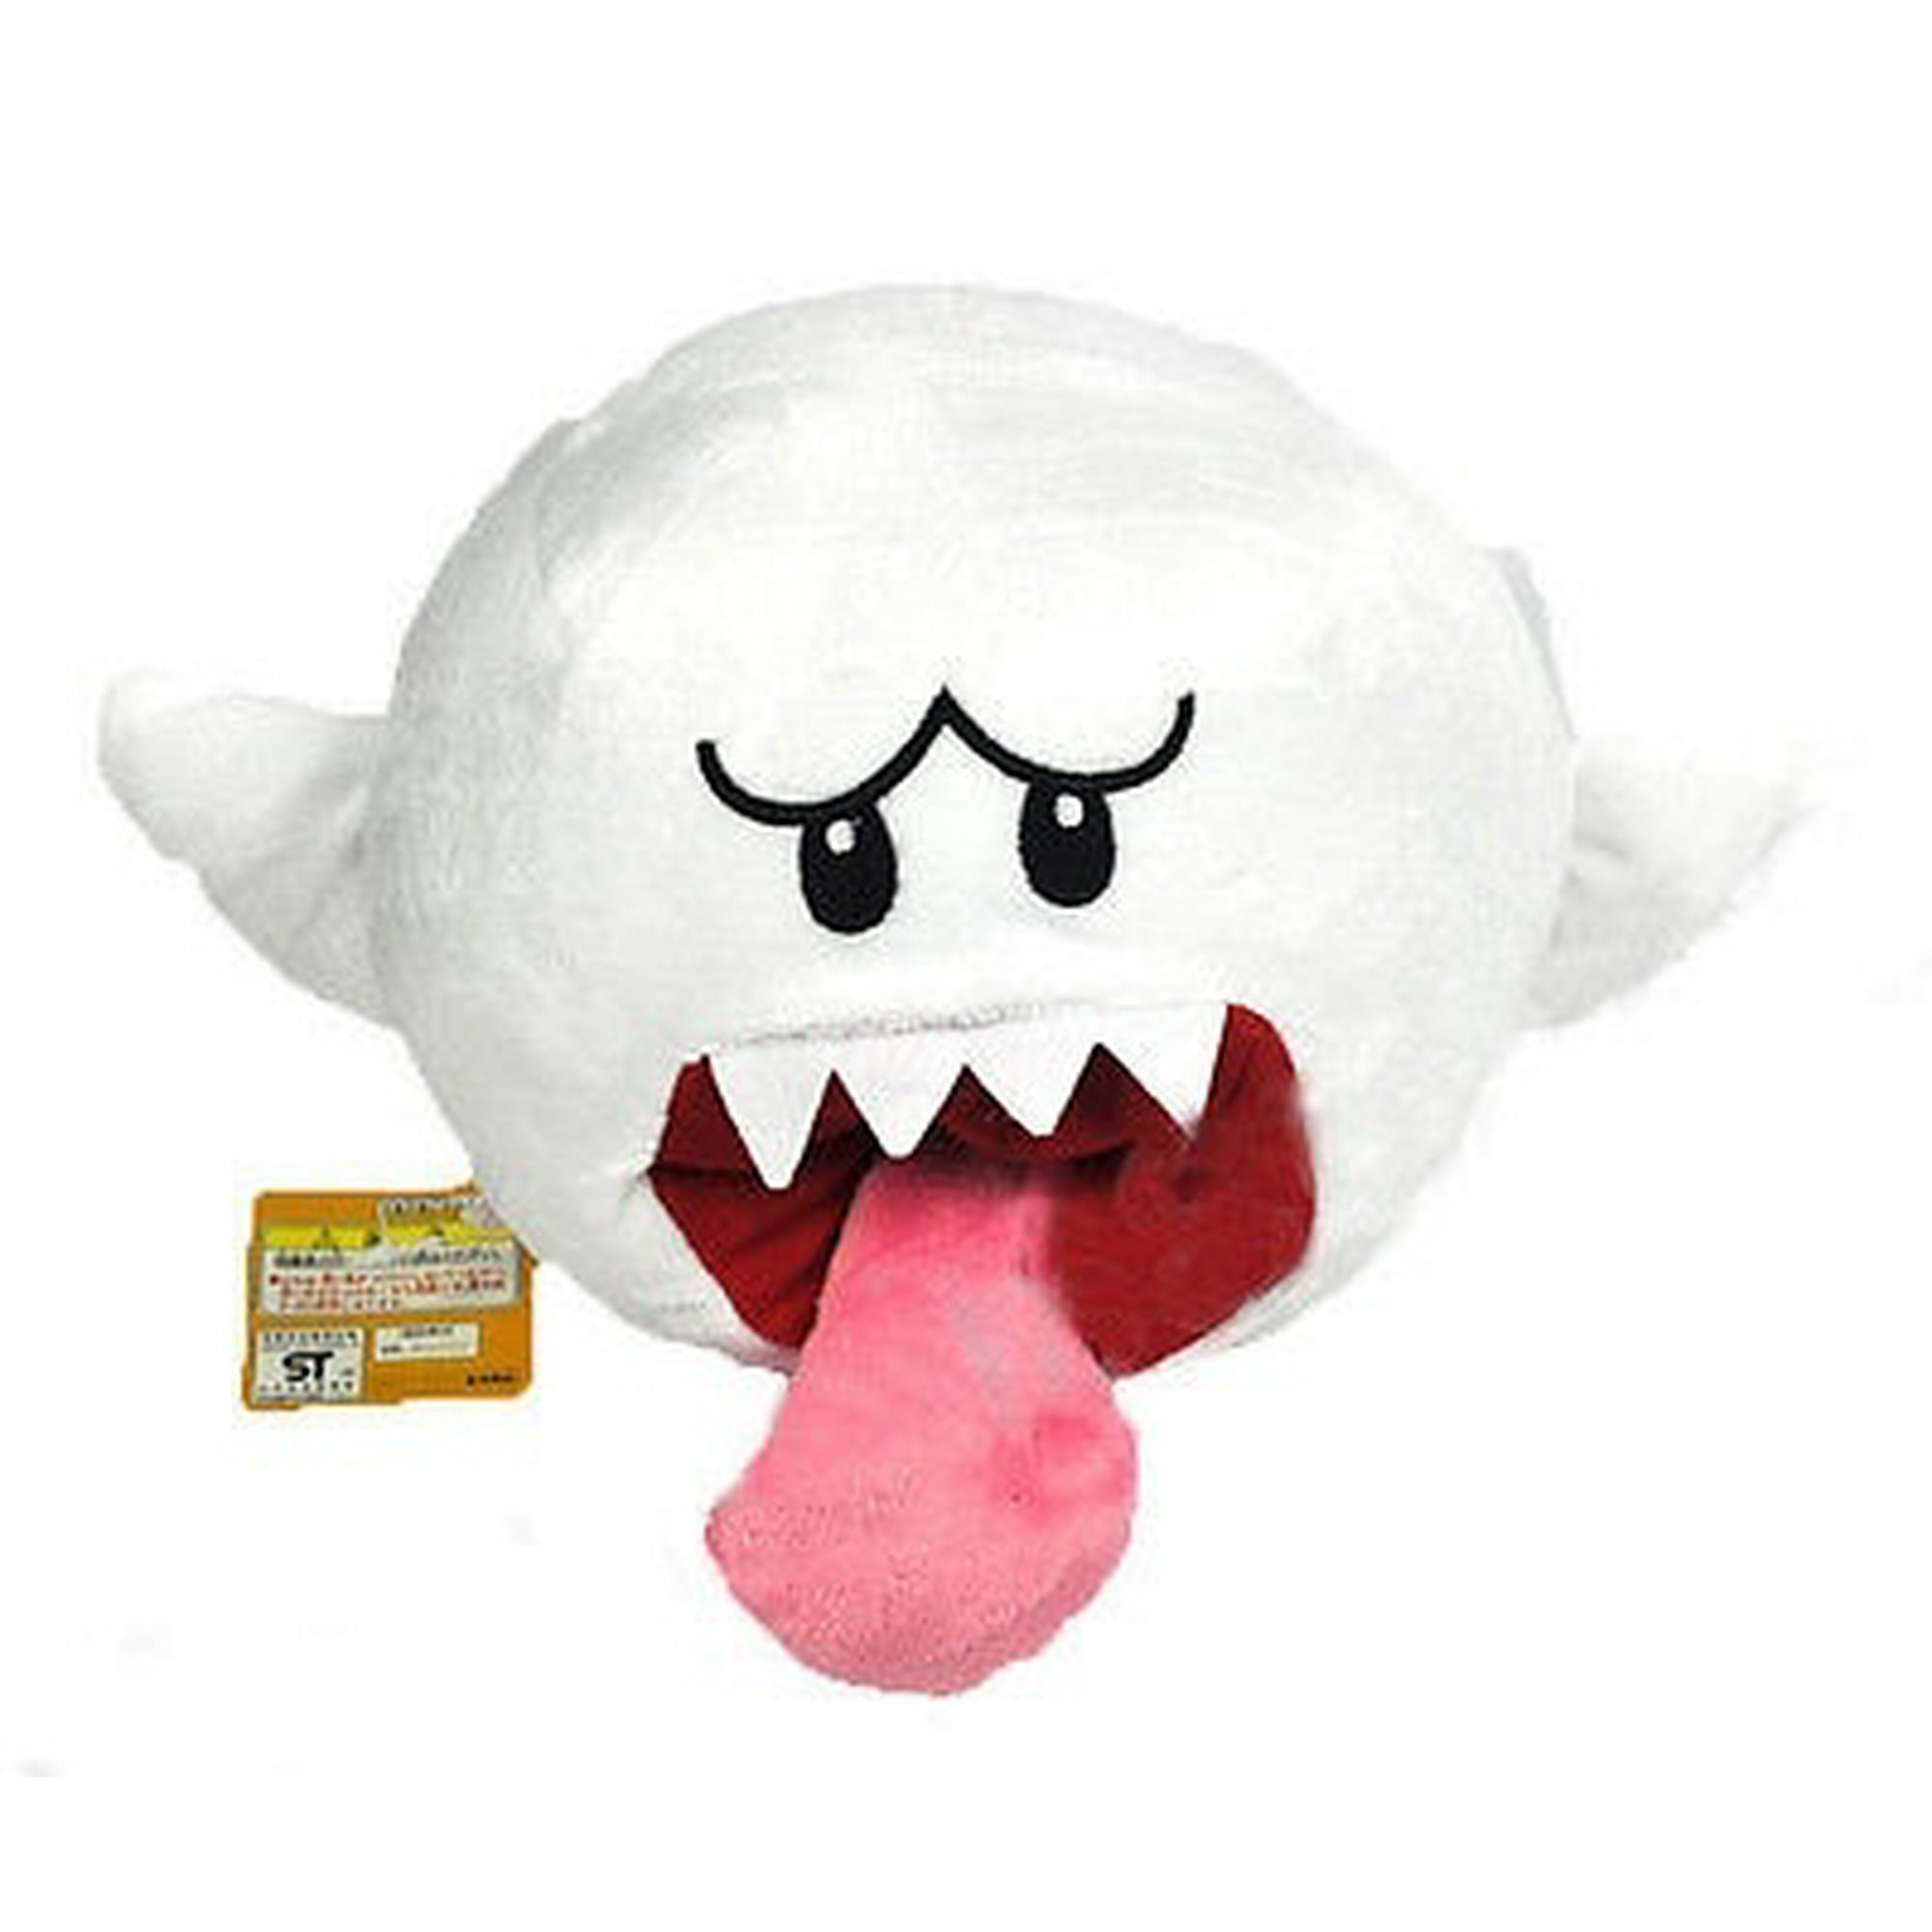 Boo - Puppet Ghost Wii U Plush Ghost King Super Mario Plush Bros. 16cm